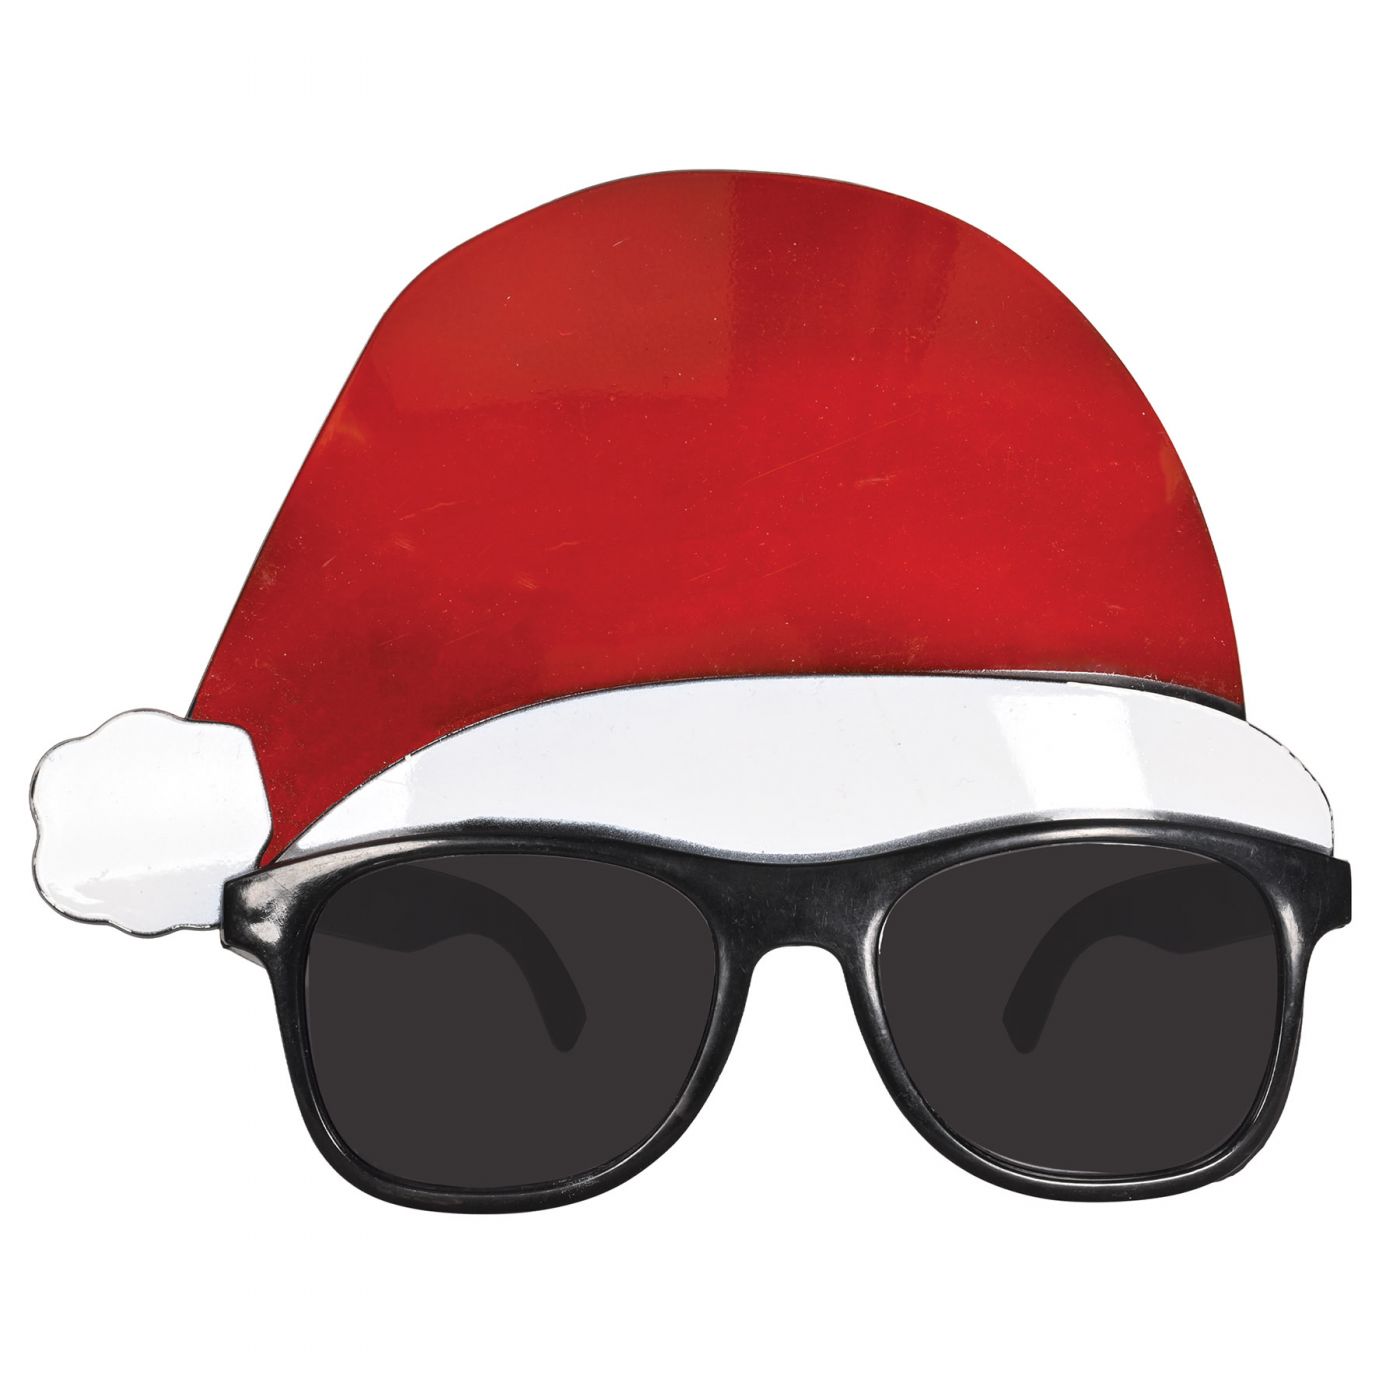 Santa Hat Glasses (6) image